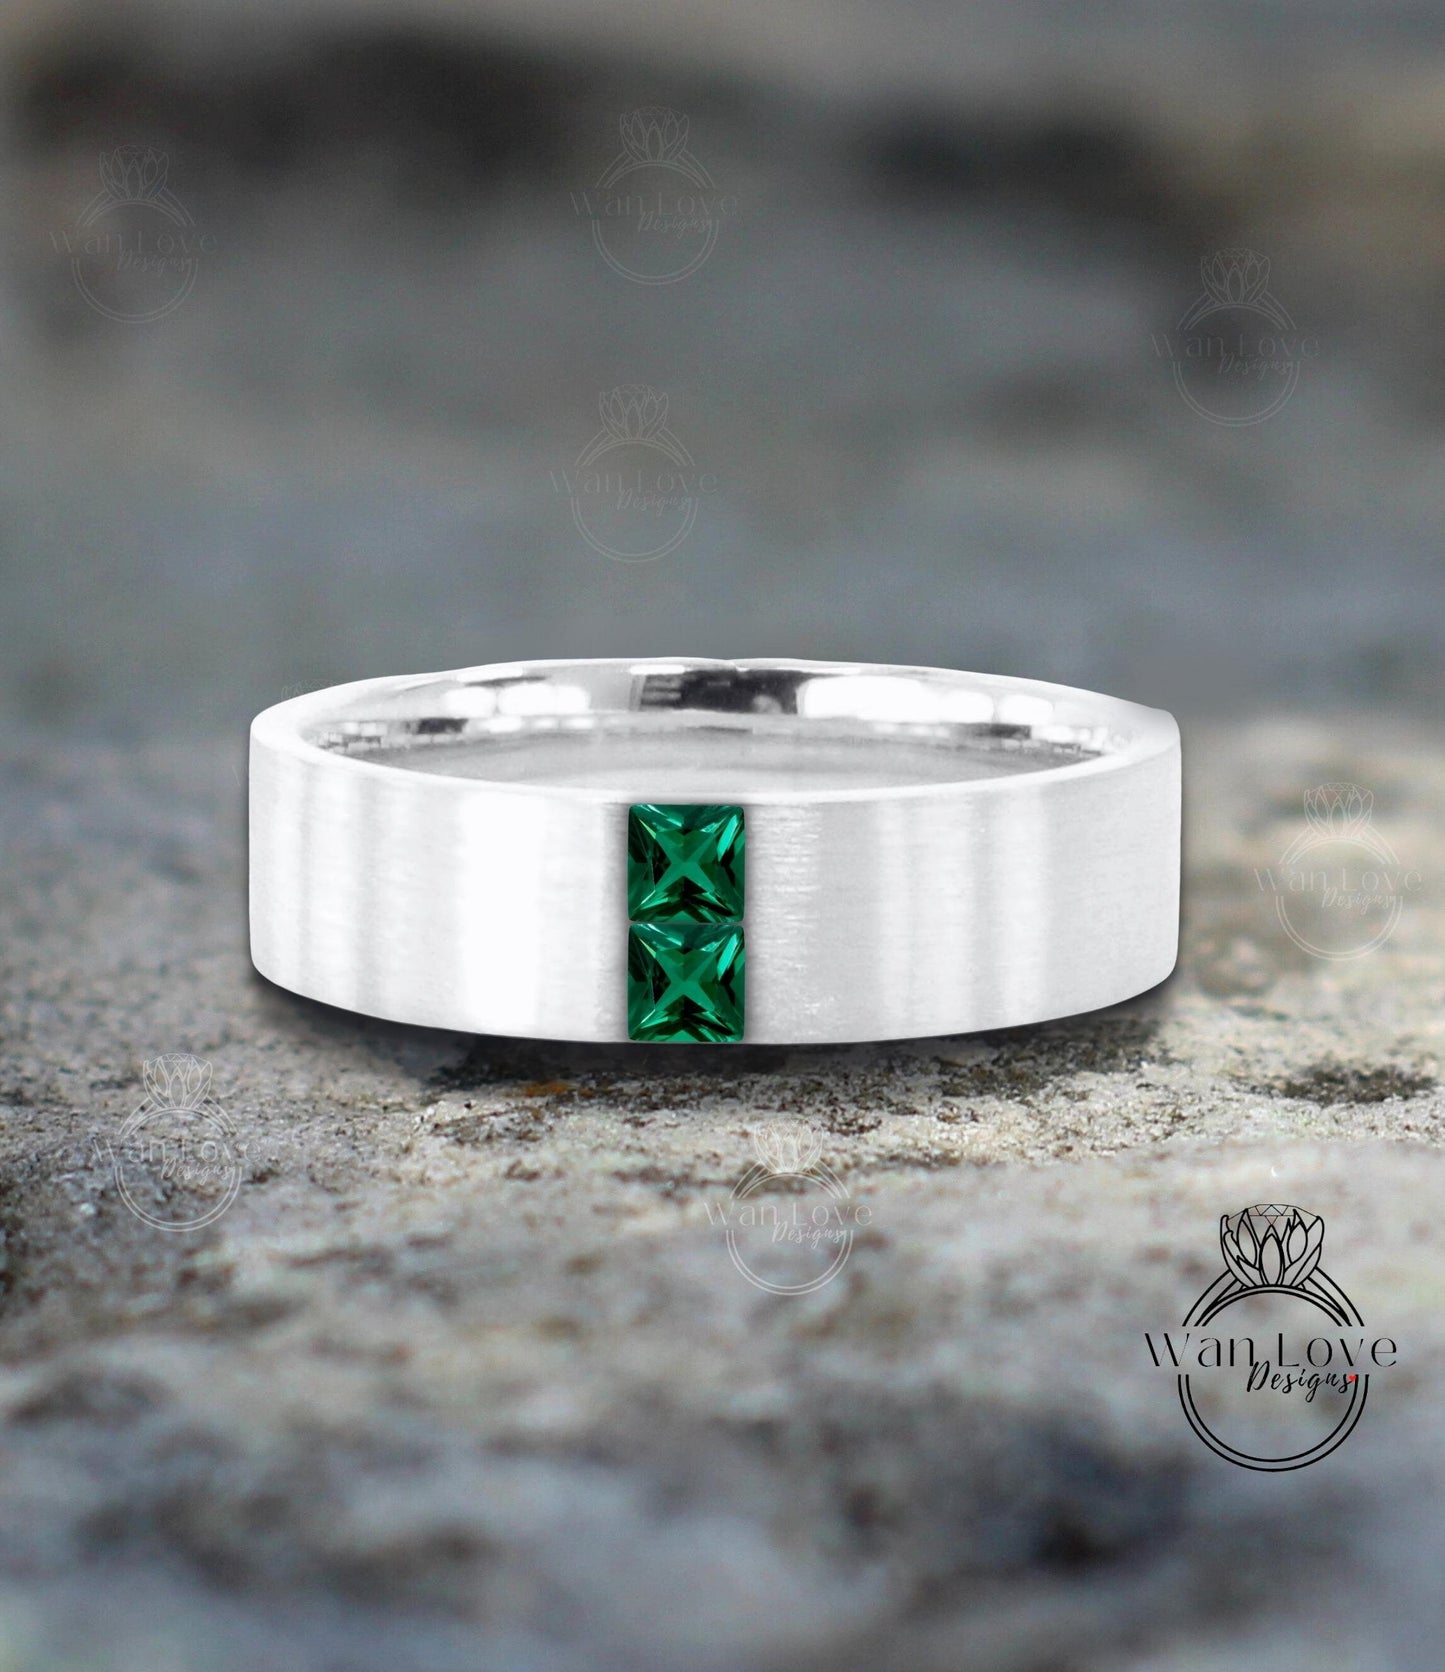 Mens Emerald Wedding Ring | Solid Rose Gold Mens Wedding Band | Princess Cut Diamond Band | Green Emerald Square Ring | His Birthstone Band Wan Love Designs